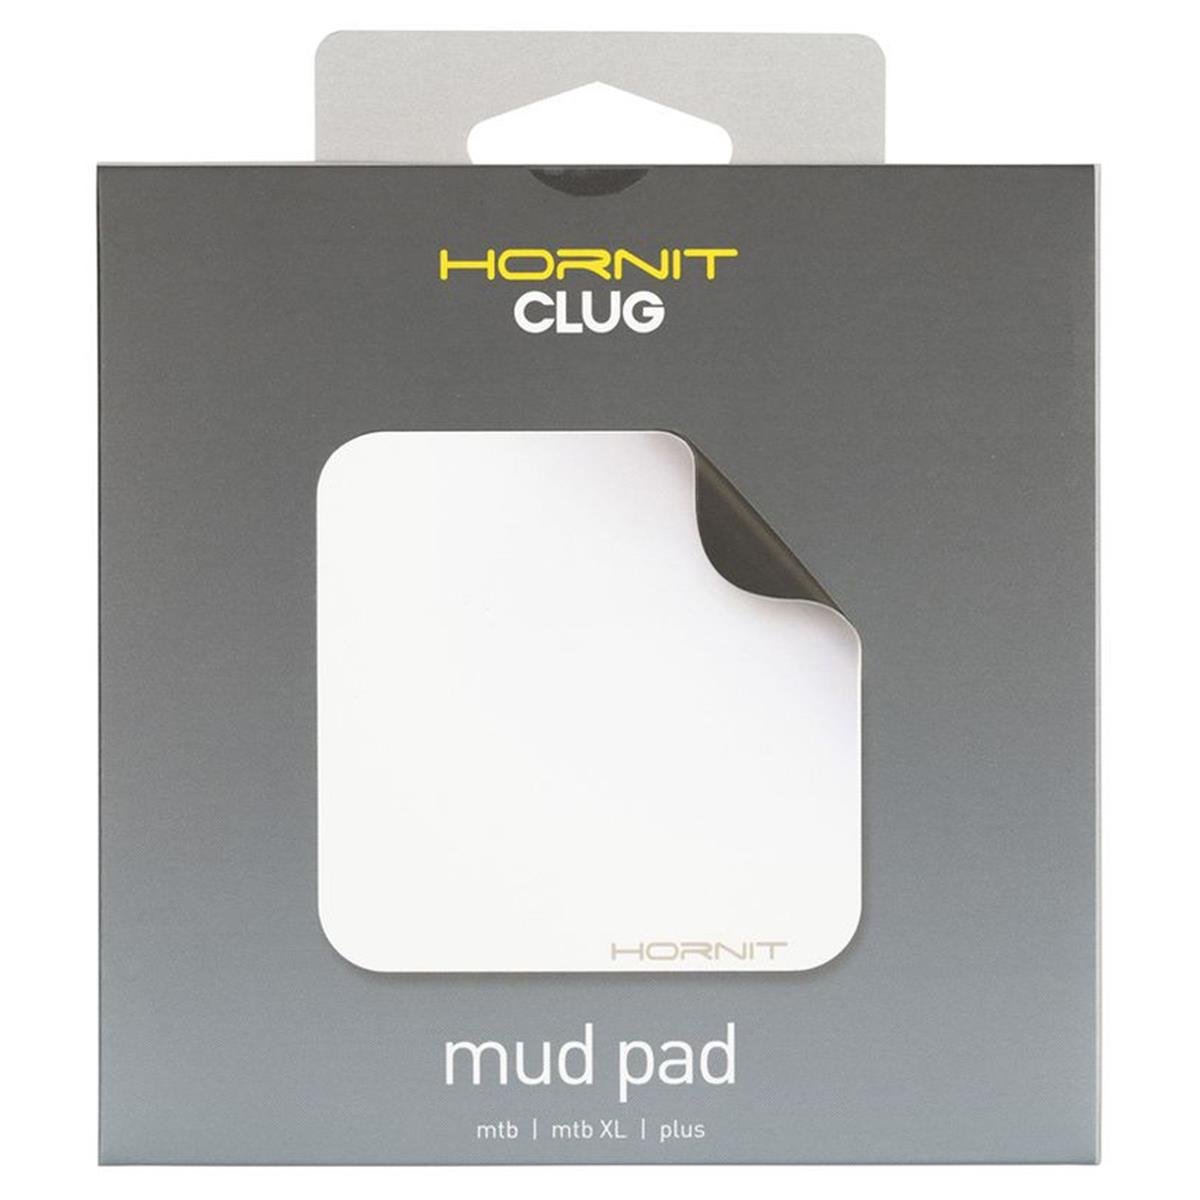 Hornit Ruban de Protection Clug Mud Pad L 114,3 x 114,3 mm